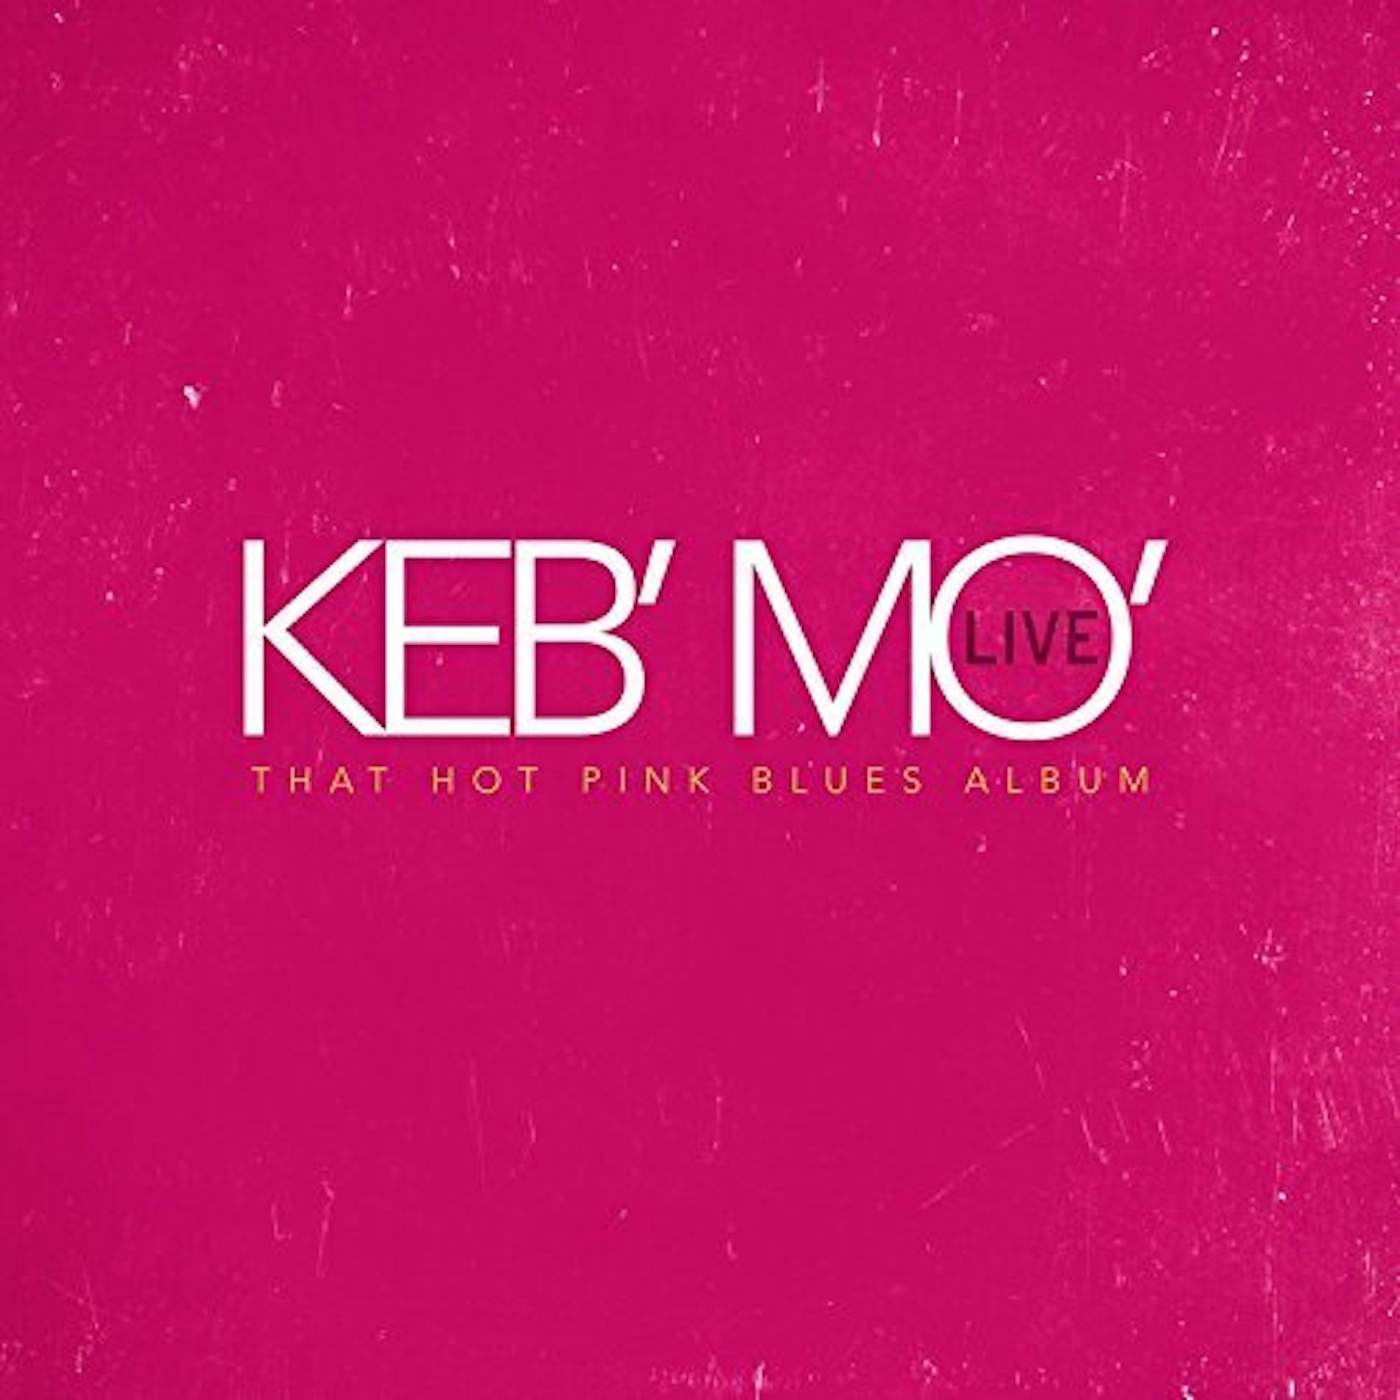 Keb' Mo' LIVE THAT HOT PINK BLUES ALBUM Vinyl Record